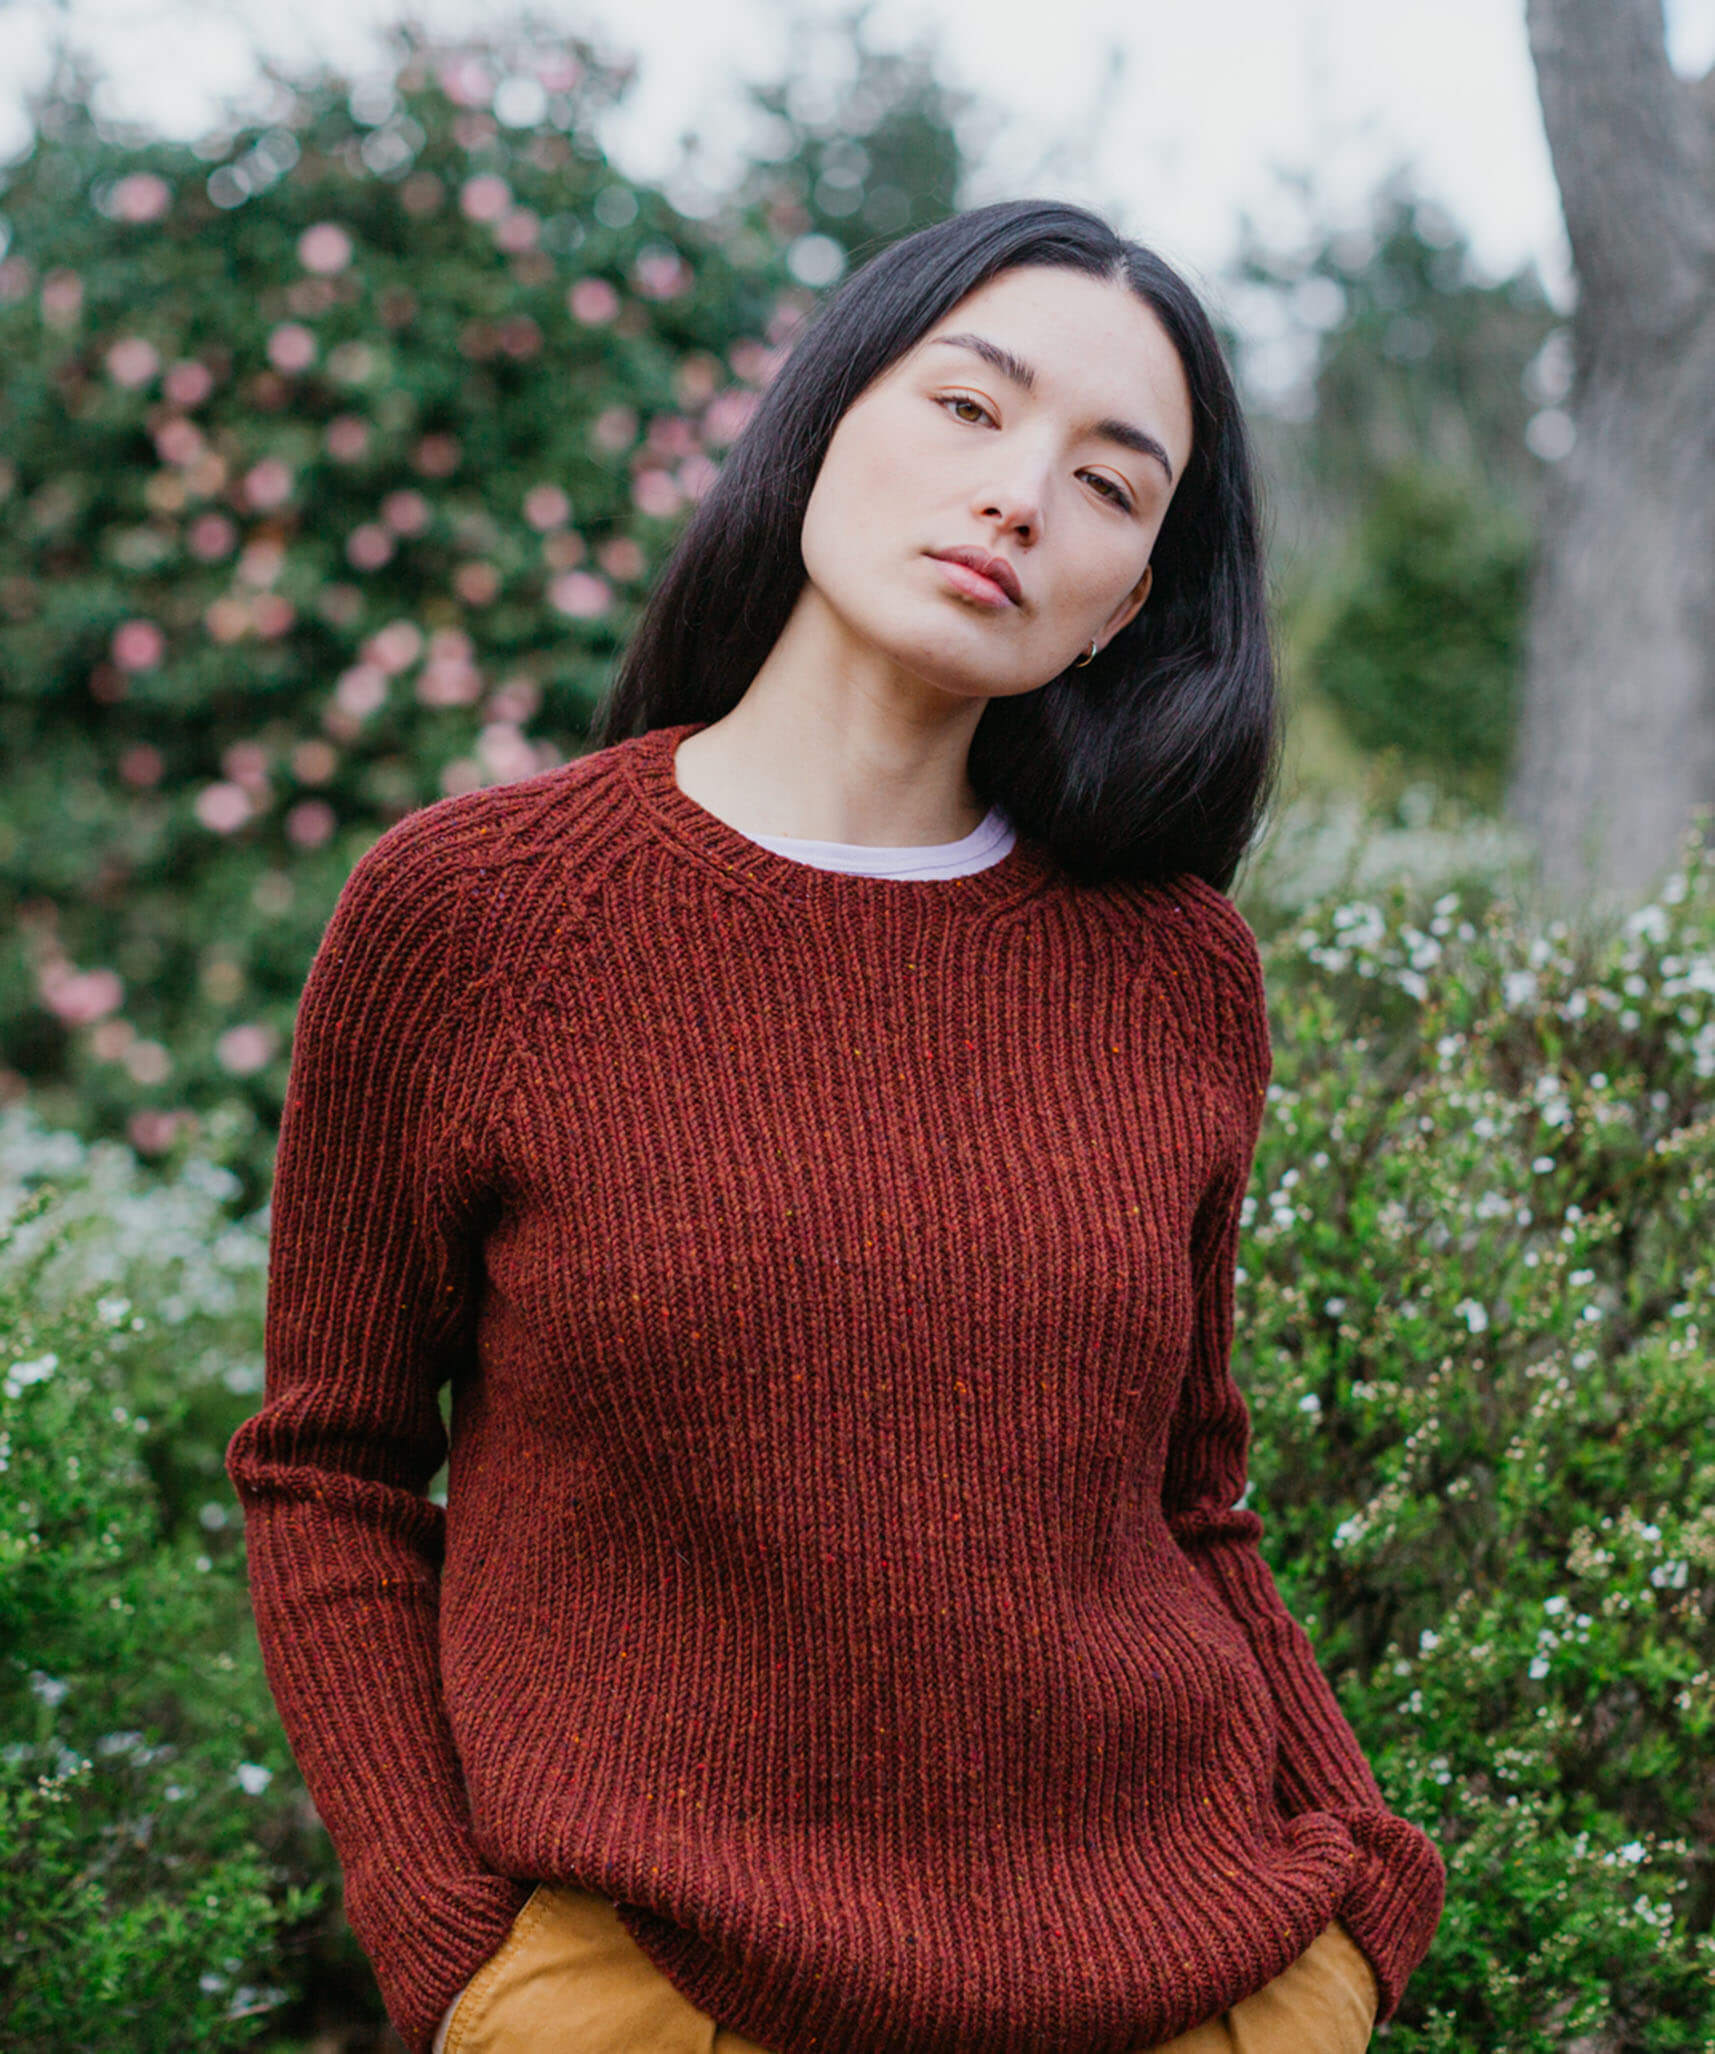 Scarlet - Sweater, Patterns